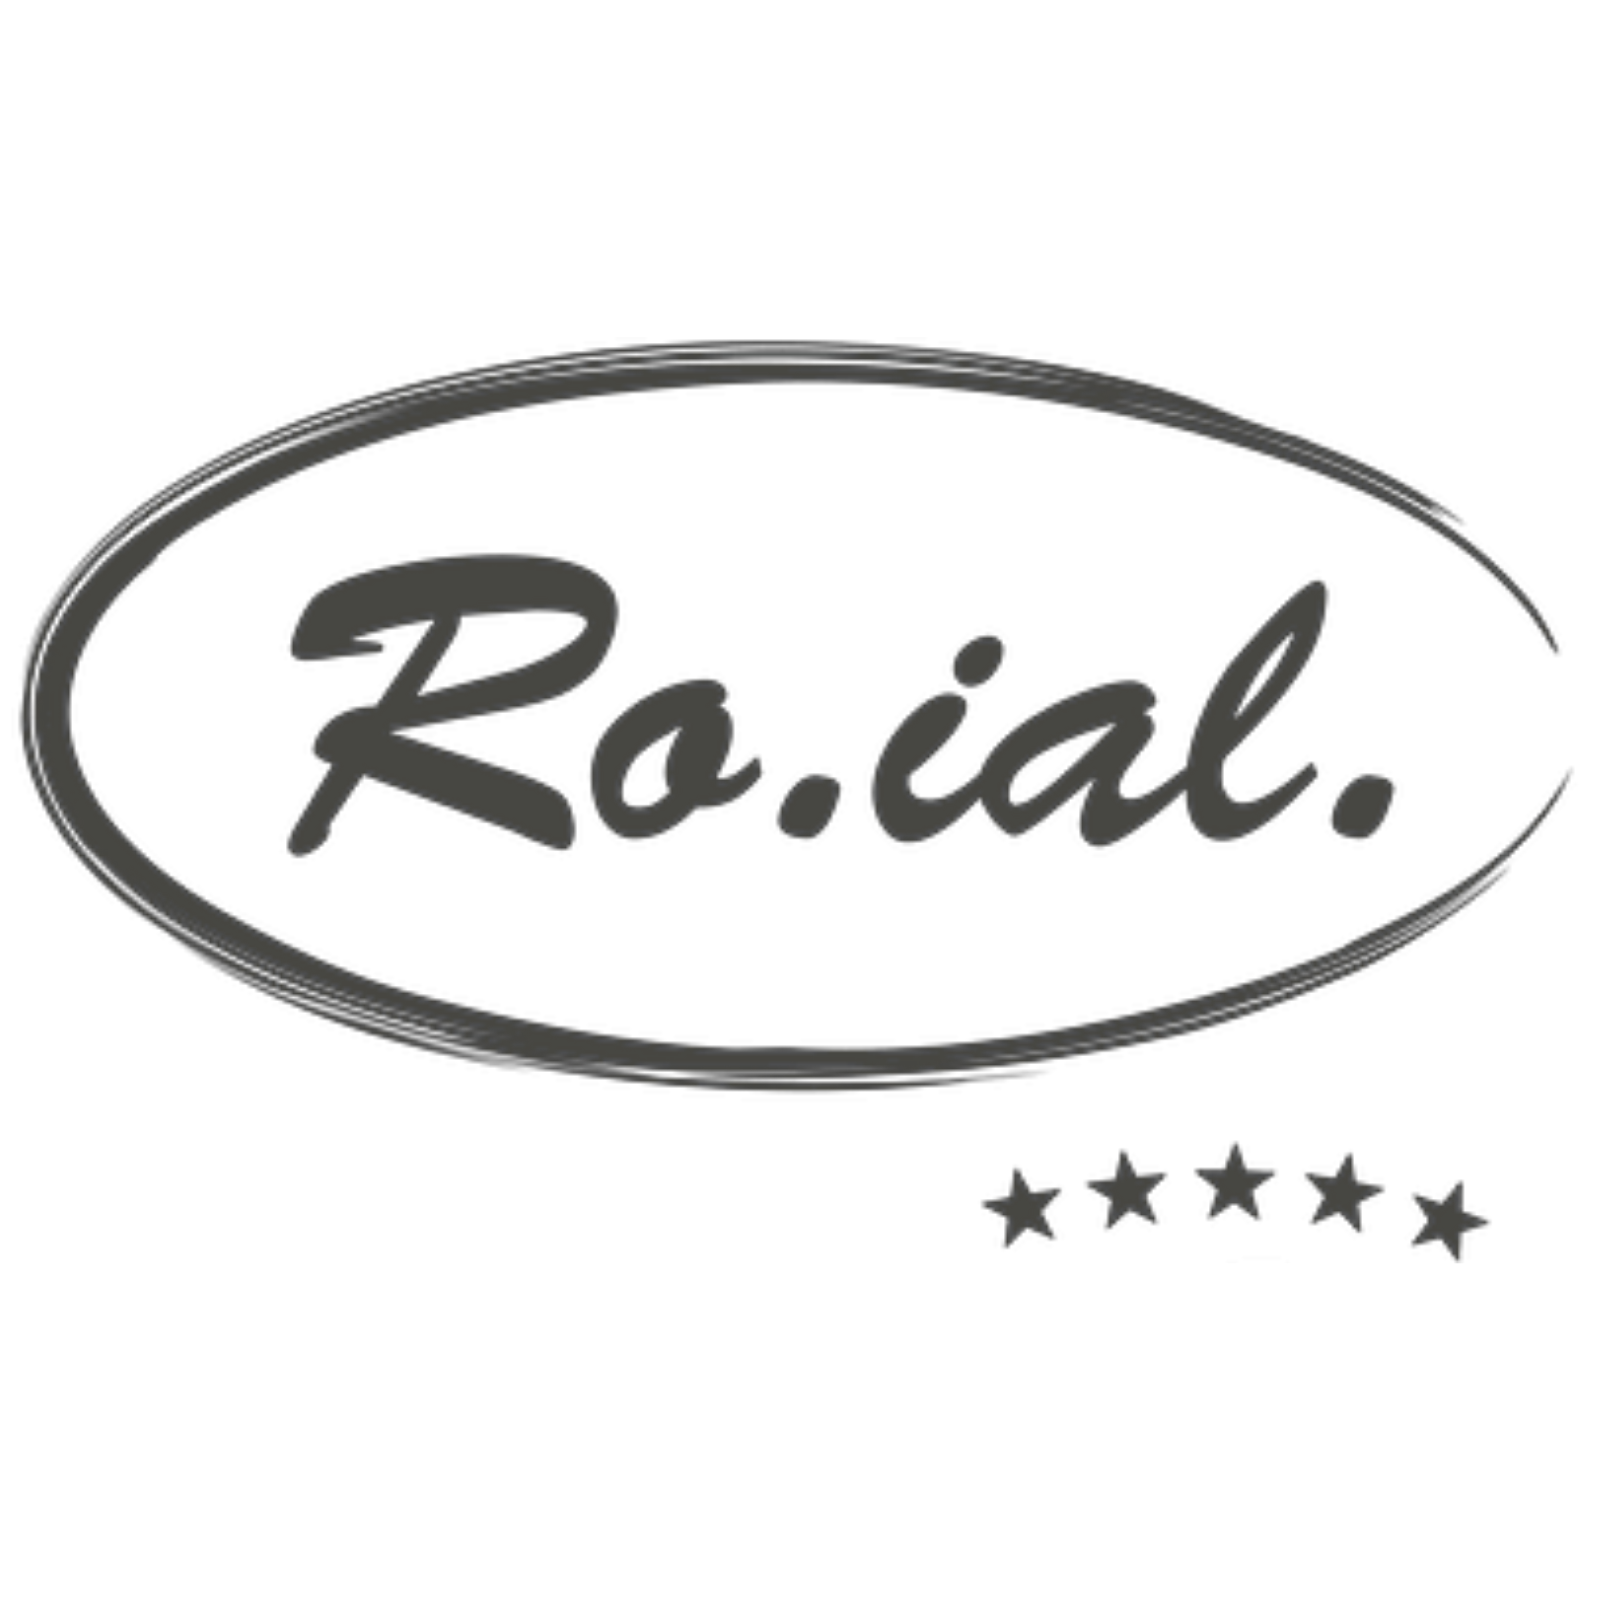 Roial